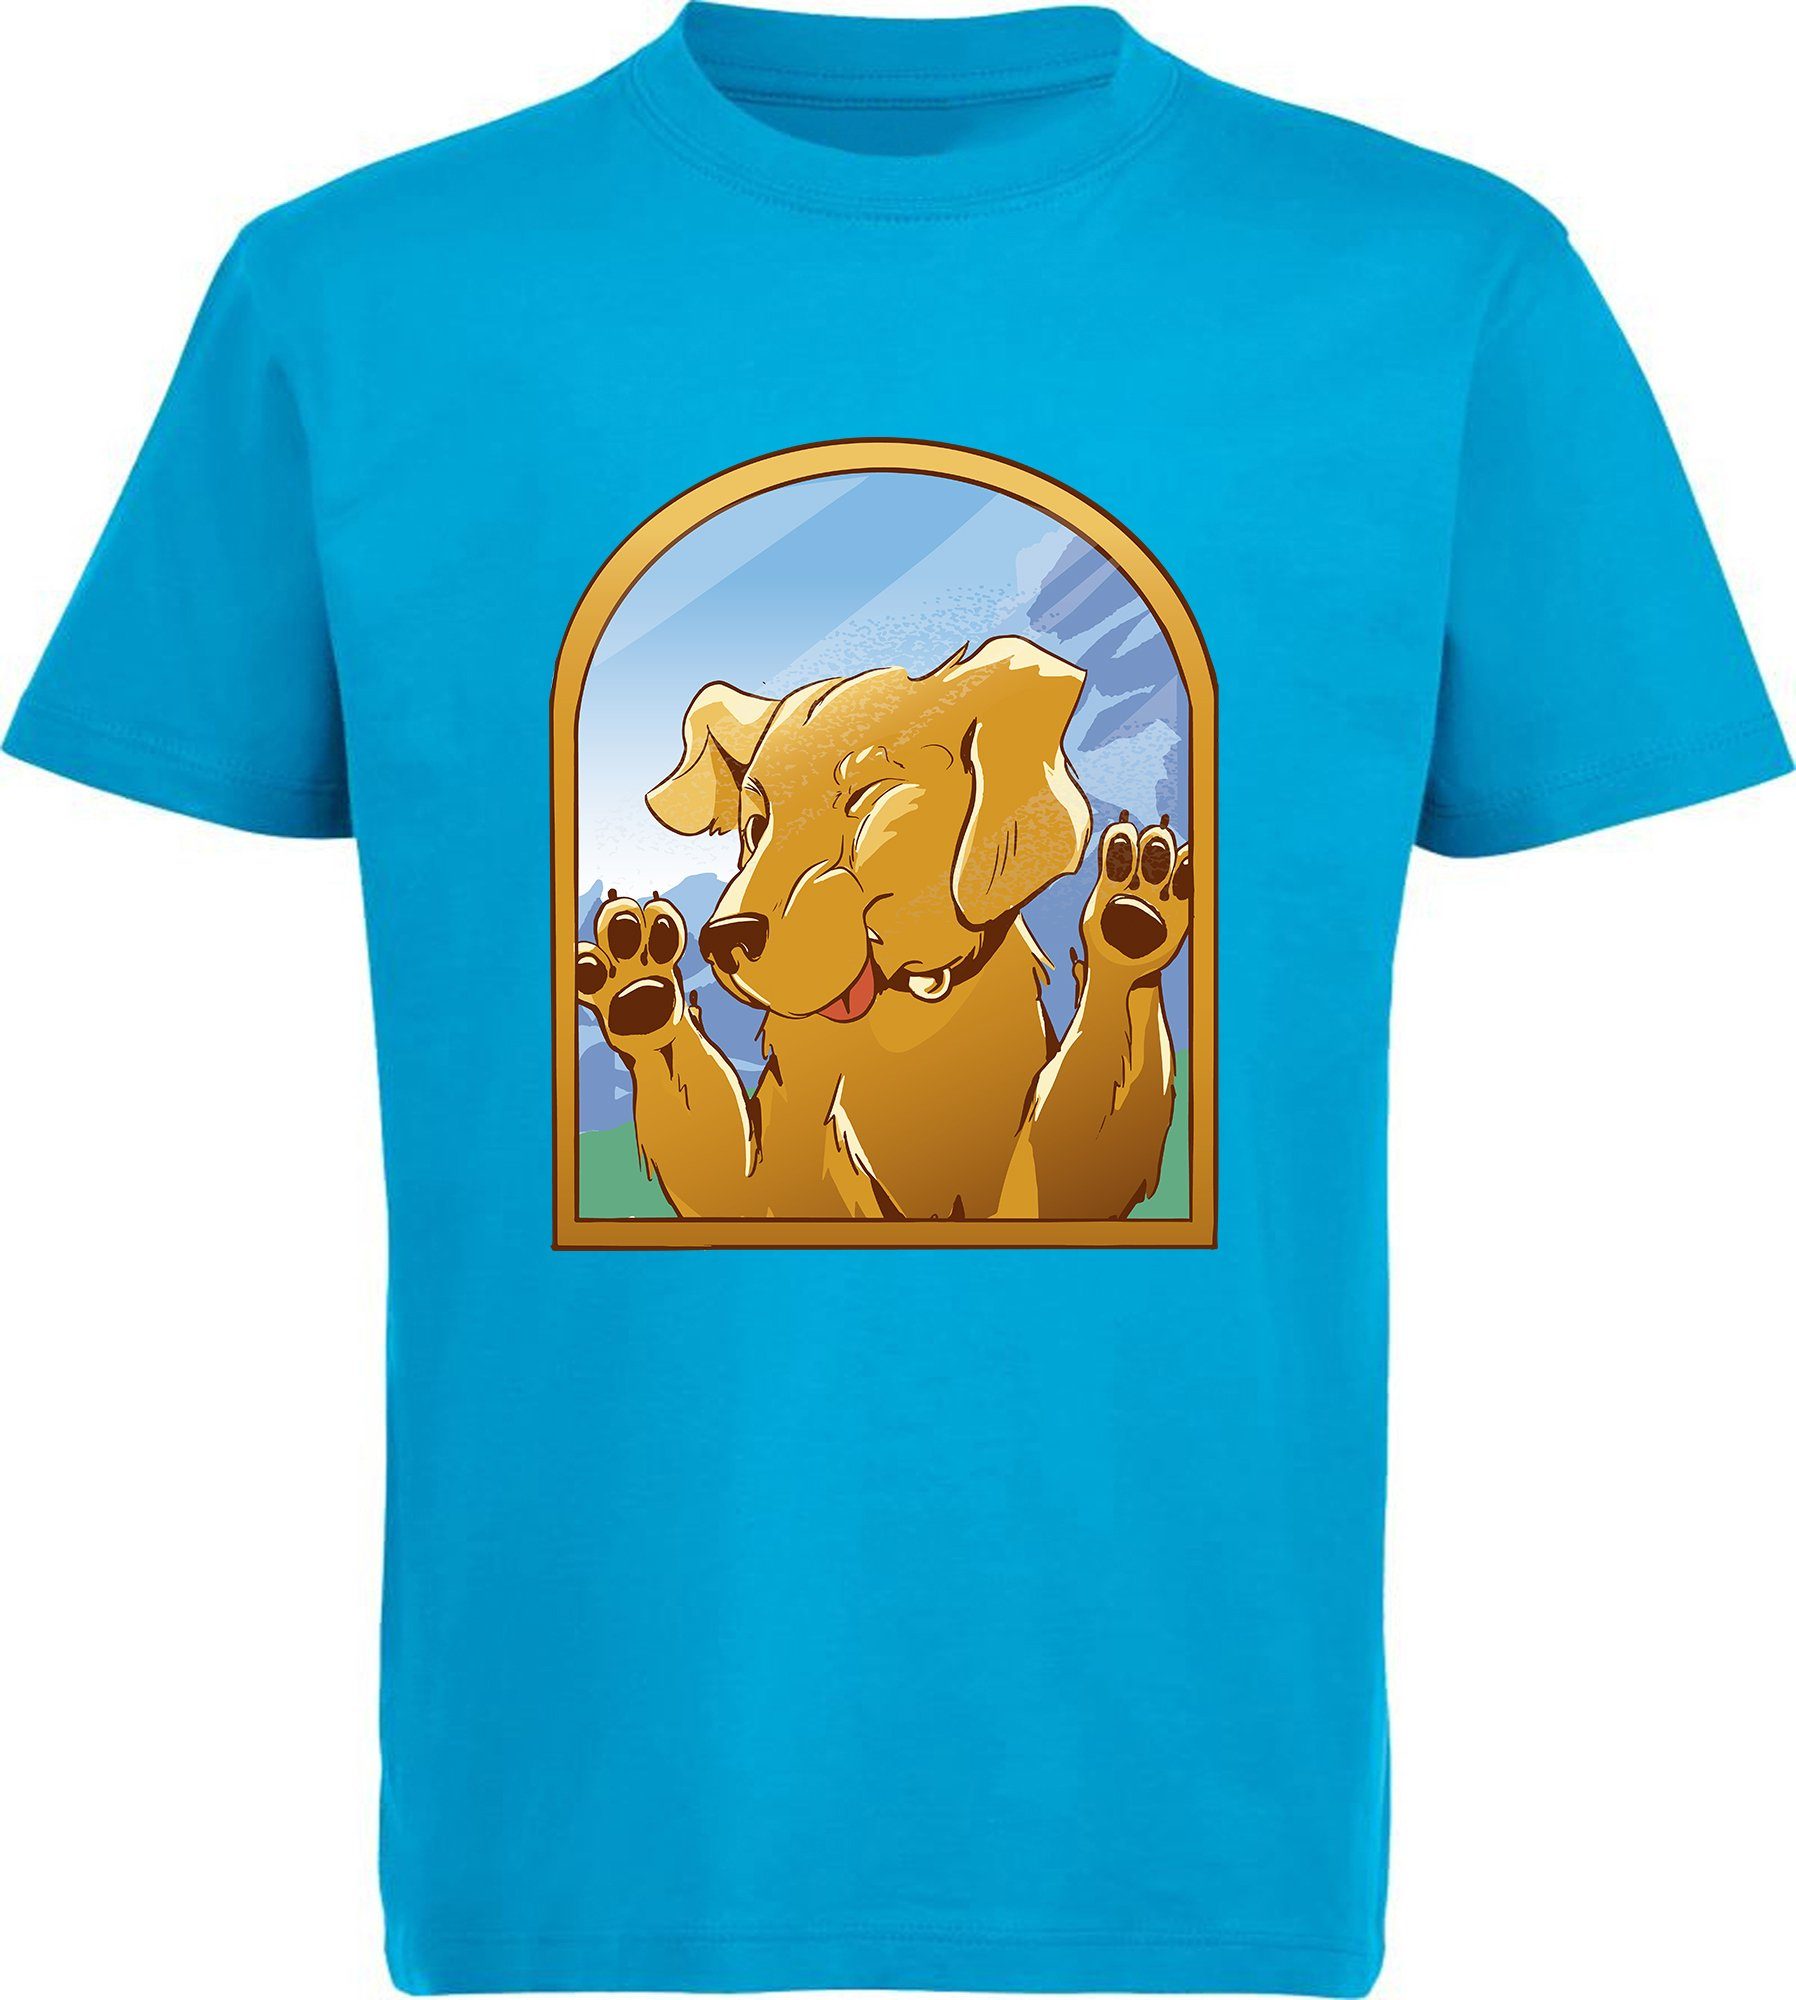 bedrucktes T-Shirt mit Fenster MyDesign24 blau Kinder - Labrador Baumwollshirt Print-Shirt Aufdruck, aqua i222 Hunde gegen